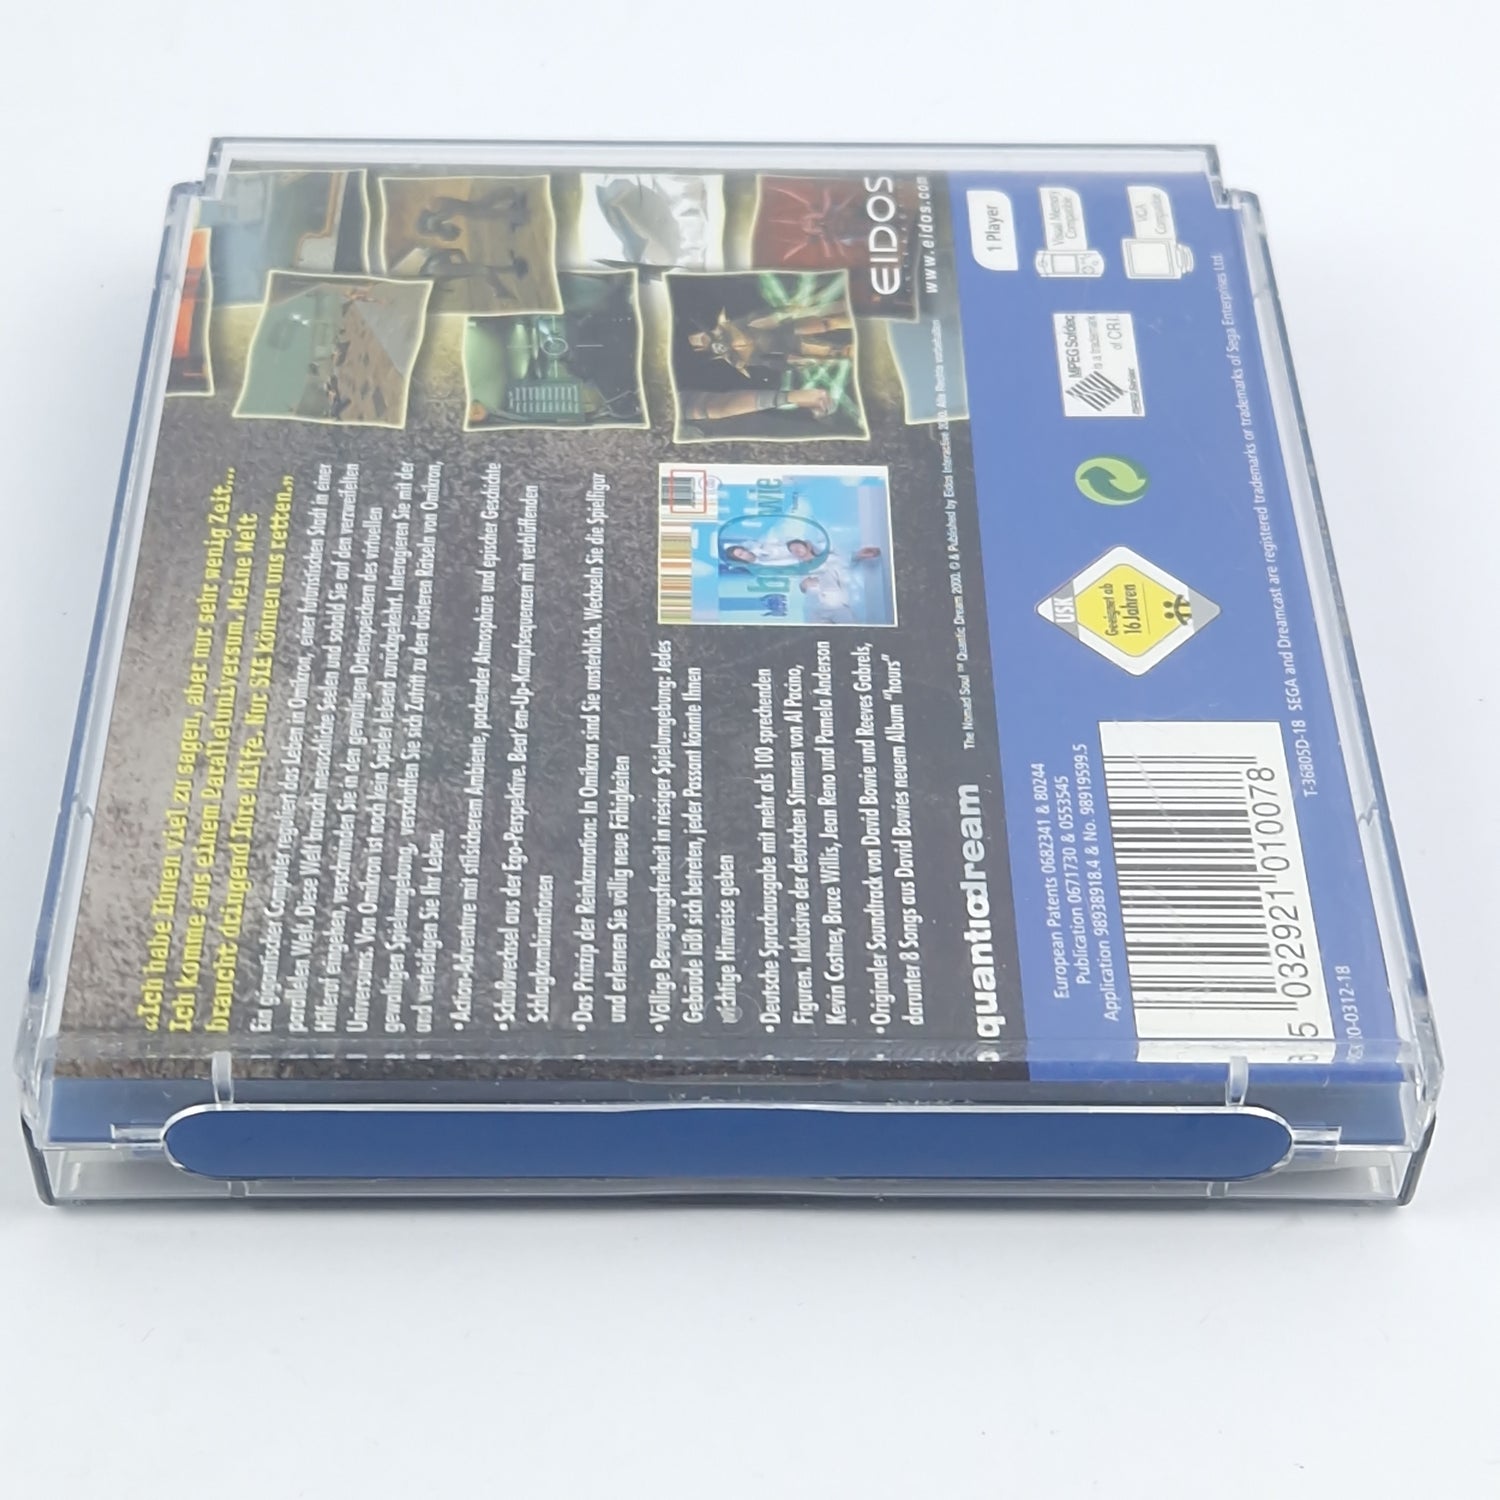 Sega Dreamcast game: The Normad Soul - CD manual OVP cib / DC PAL